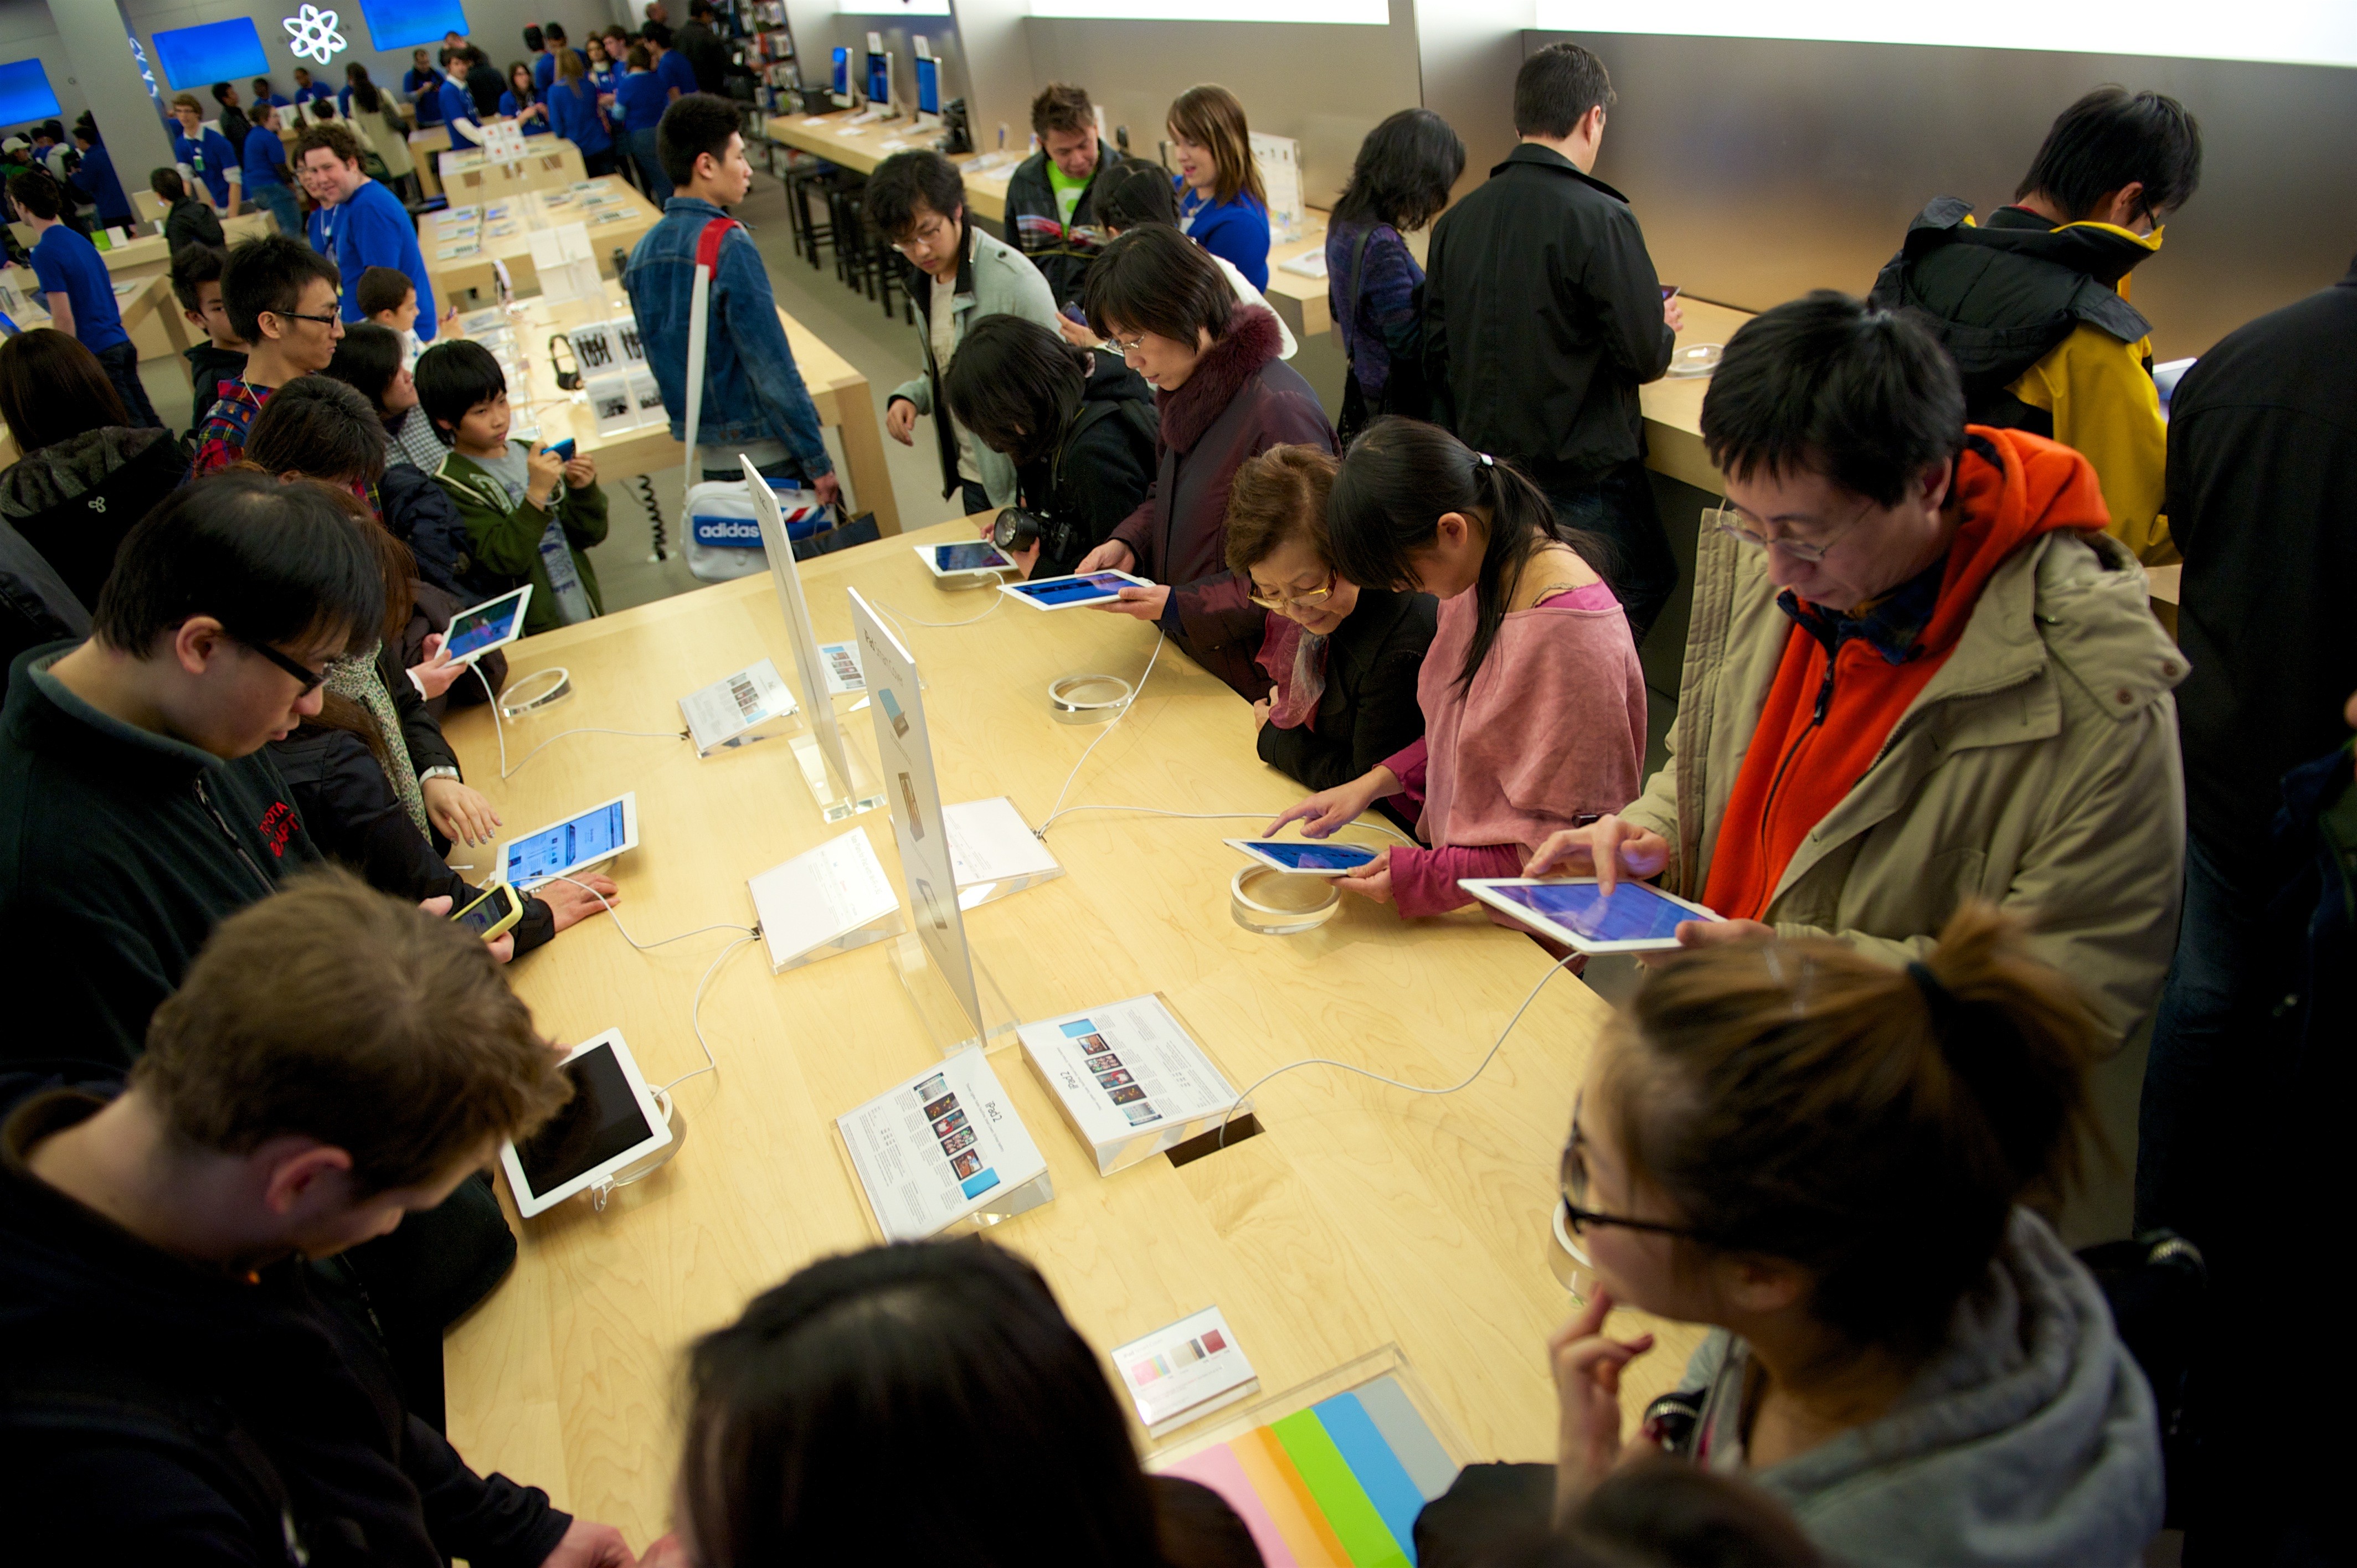 Apple Store 的展示桌總是聚集了試玩的人潮（照片片提供：Michael）